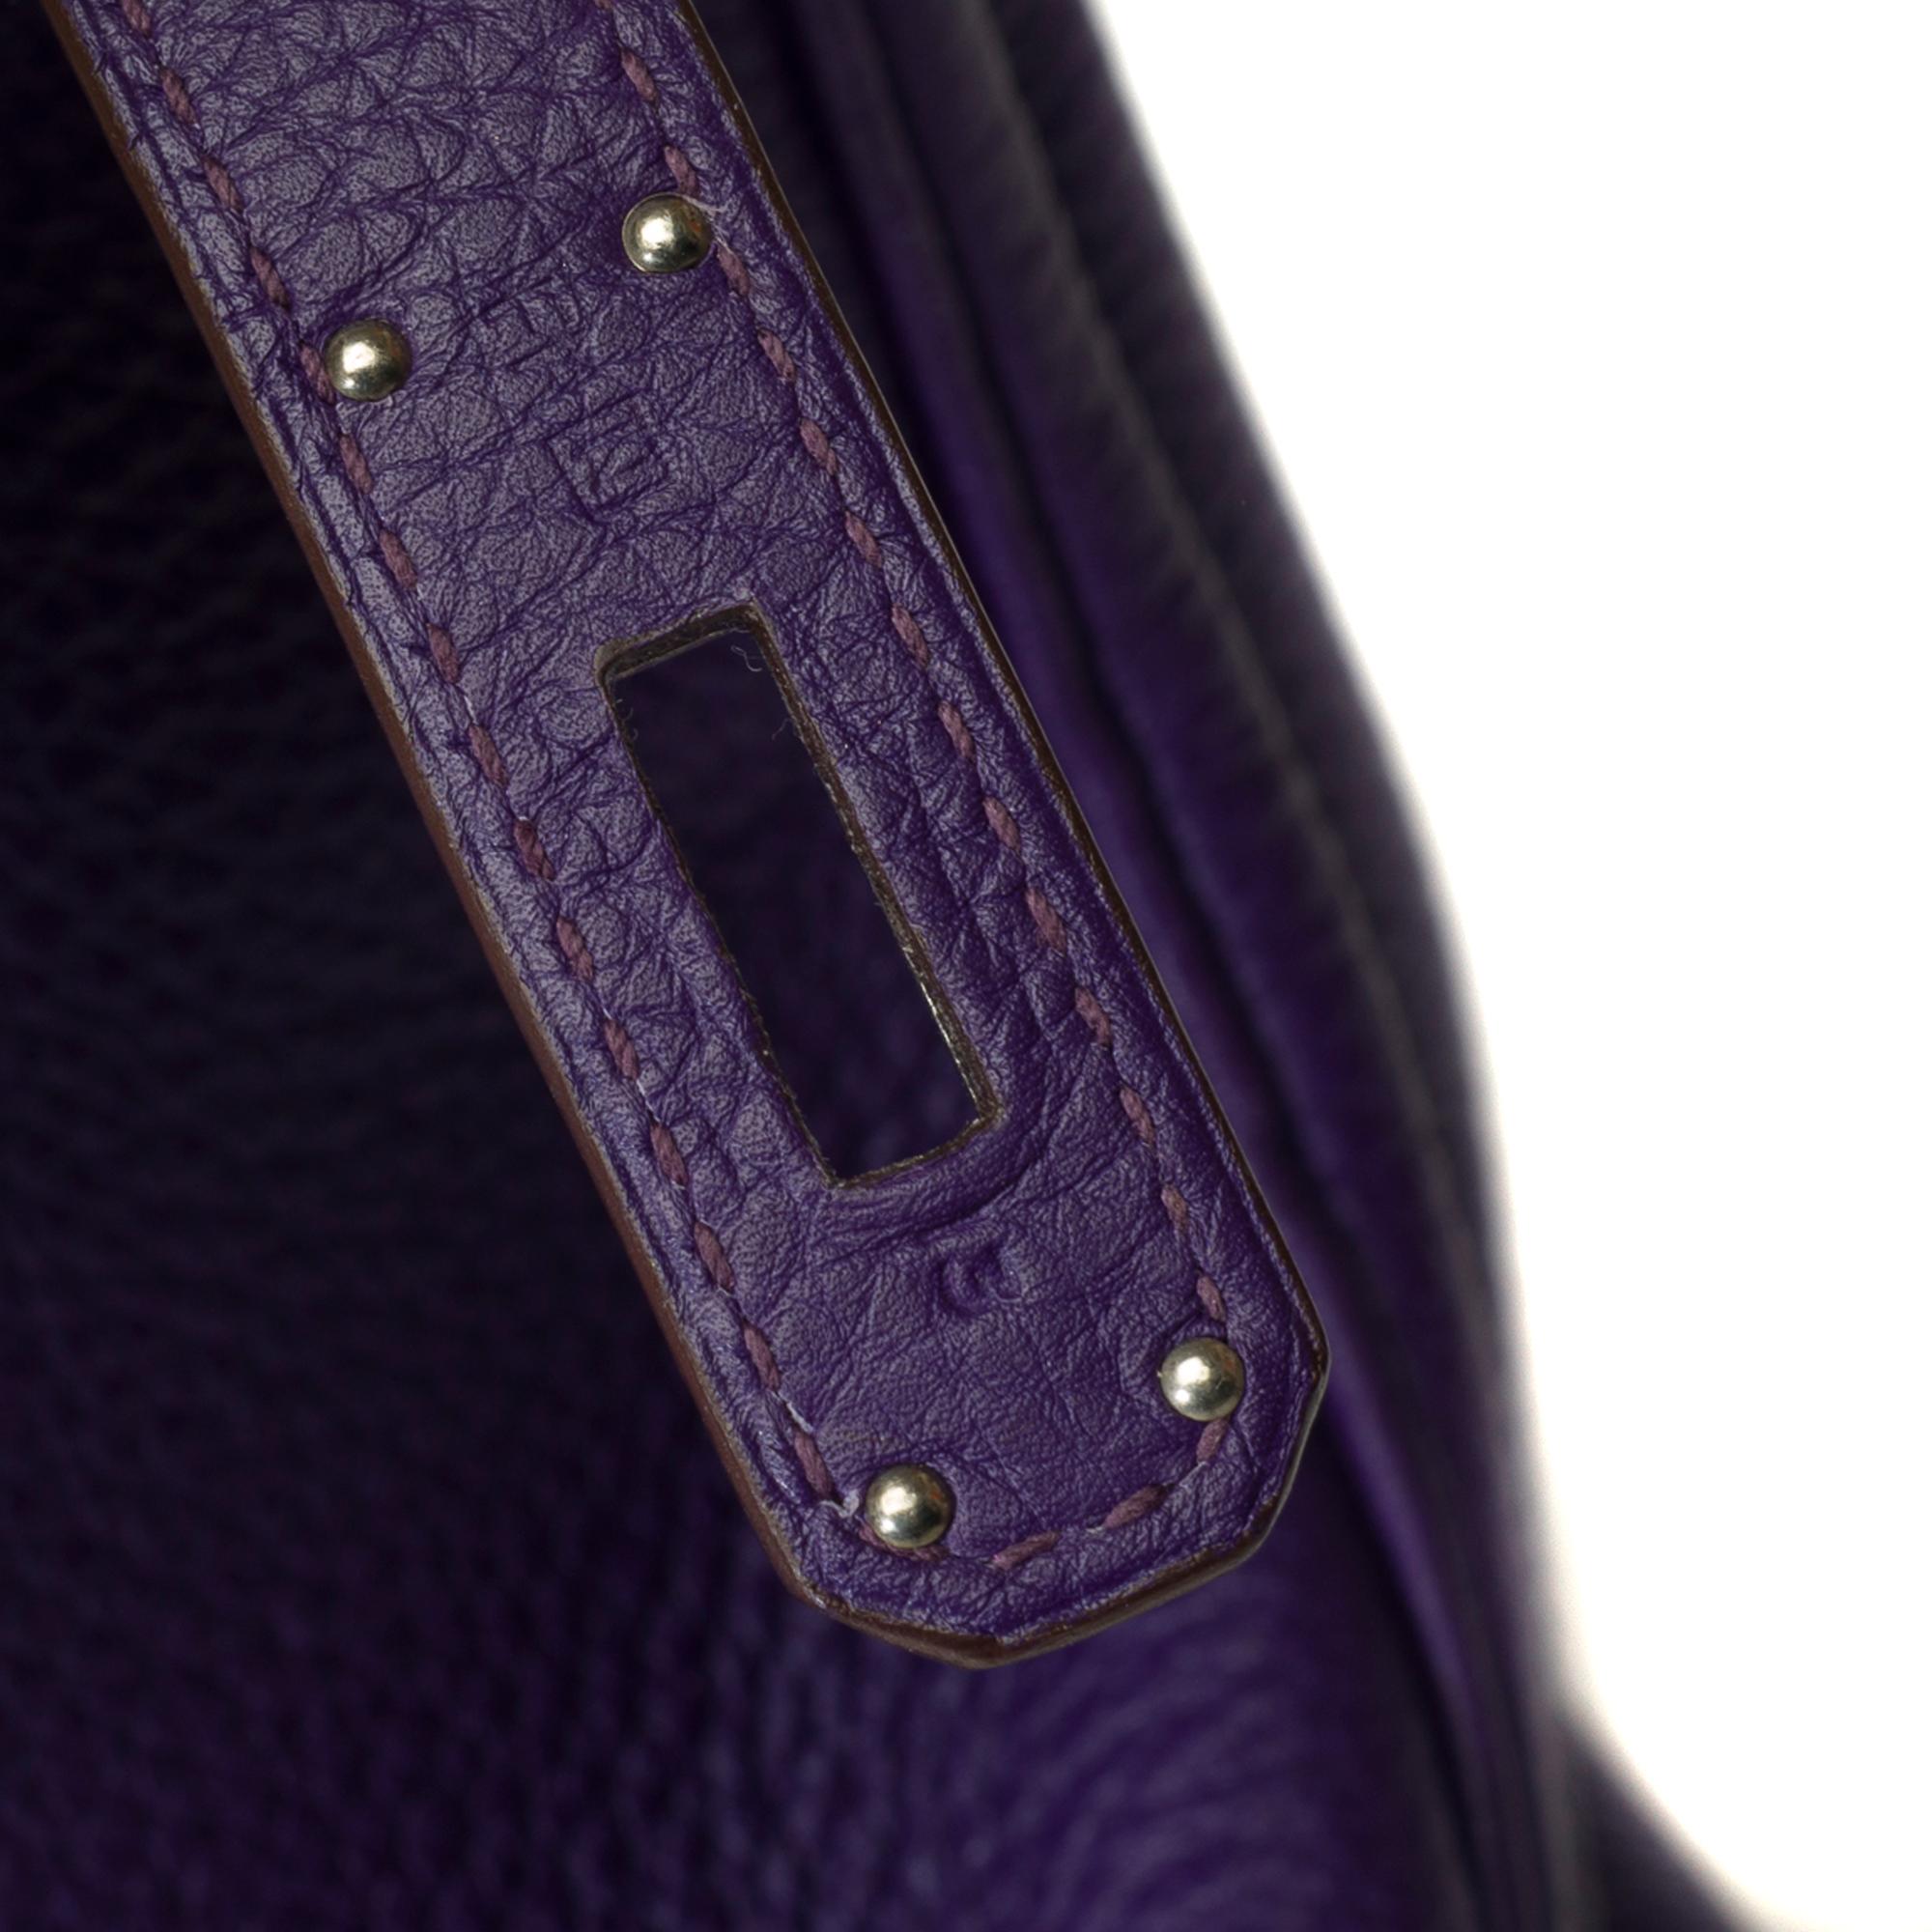 Classy & Rare Hermes Birkin 40 handbag in Iris Purple Togo leather, SHW 3